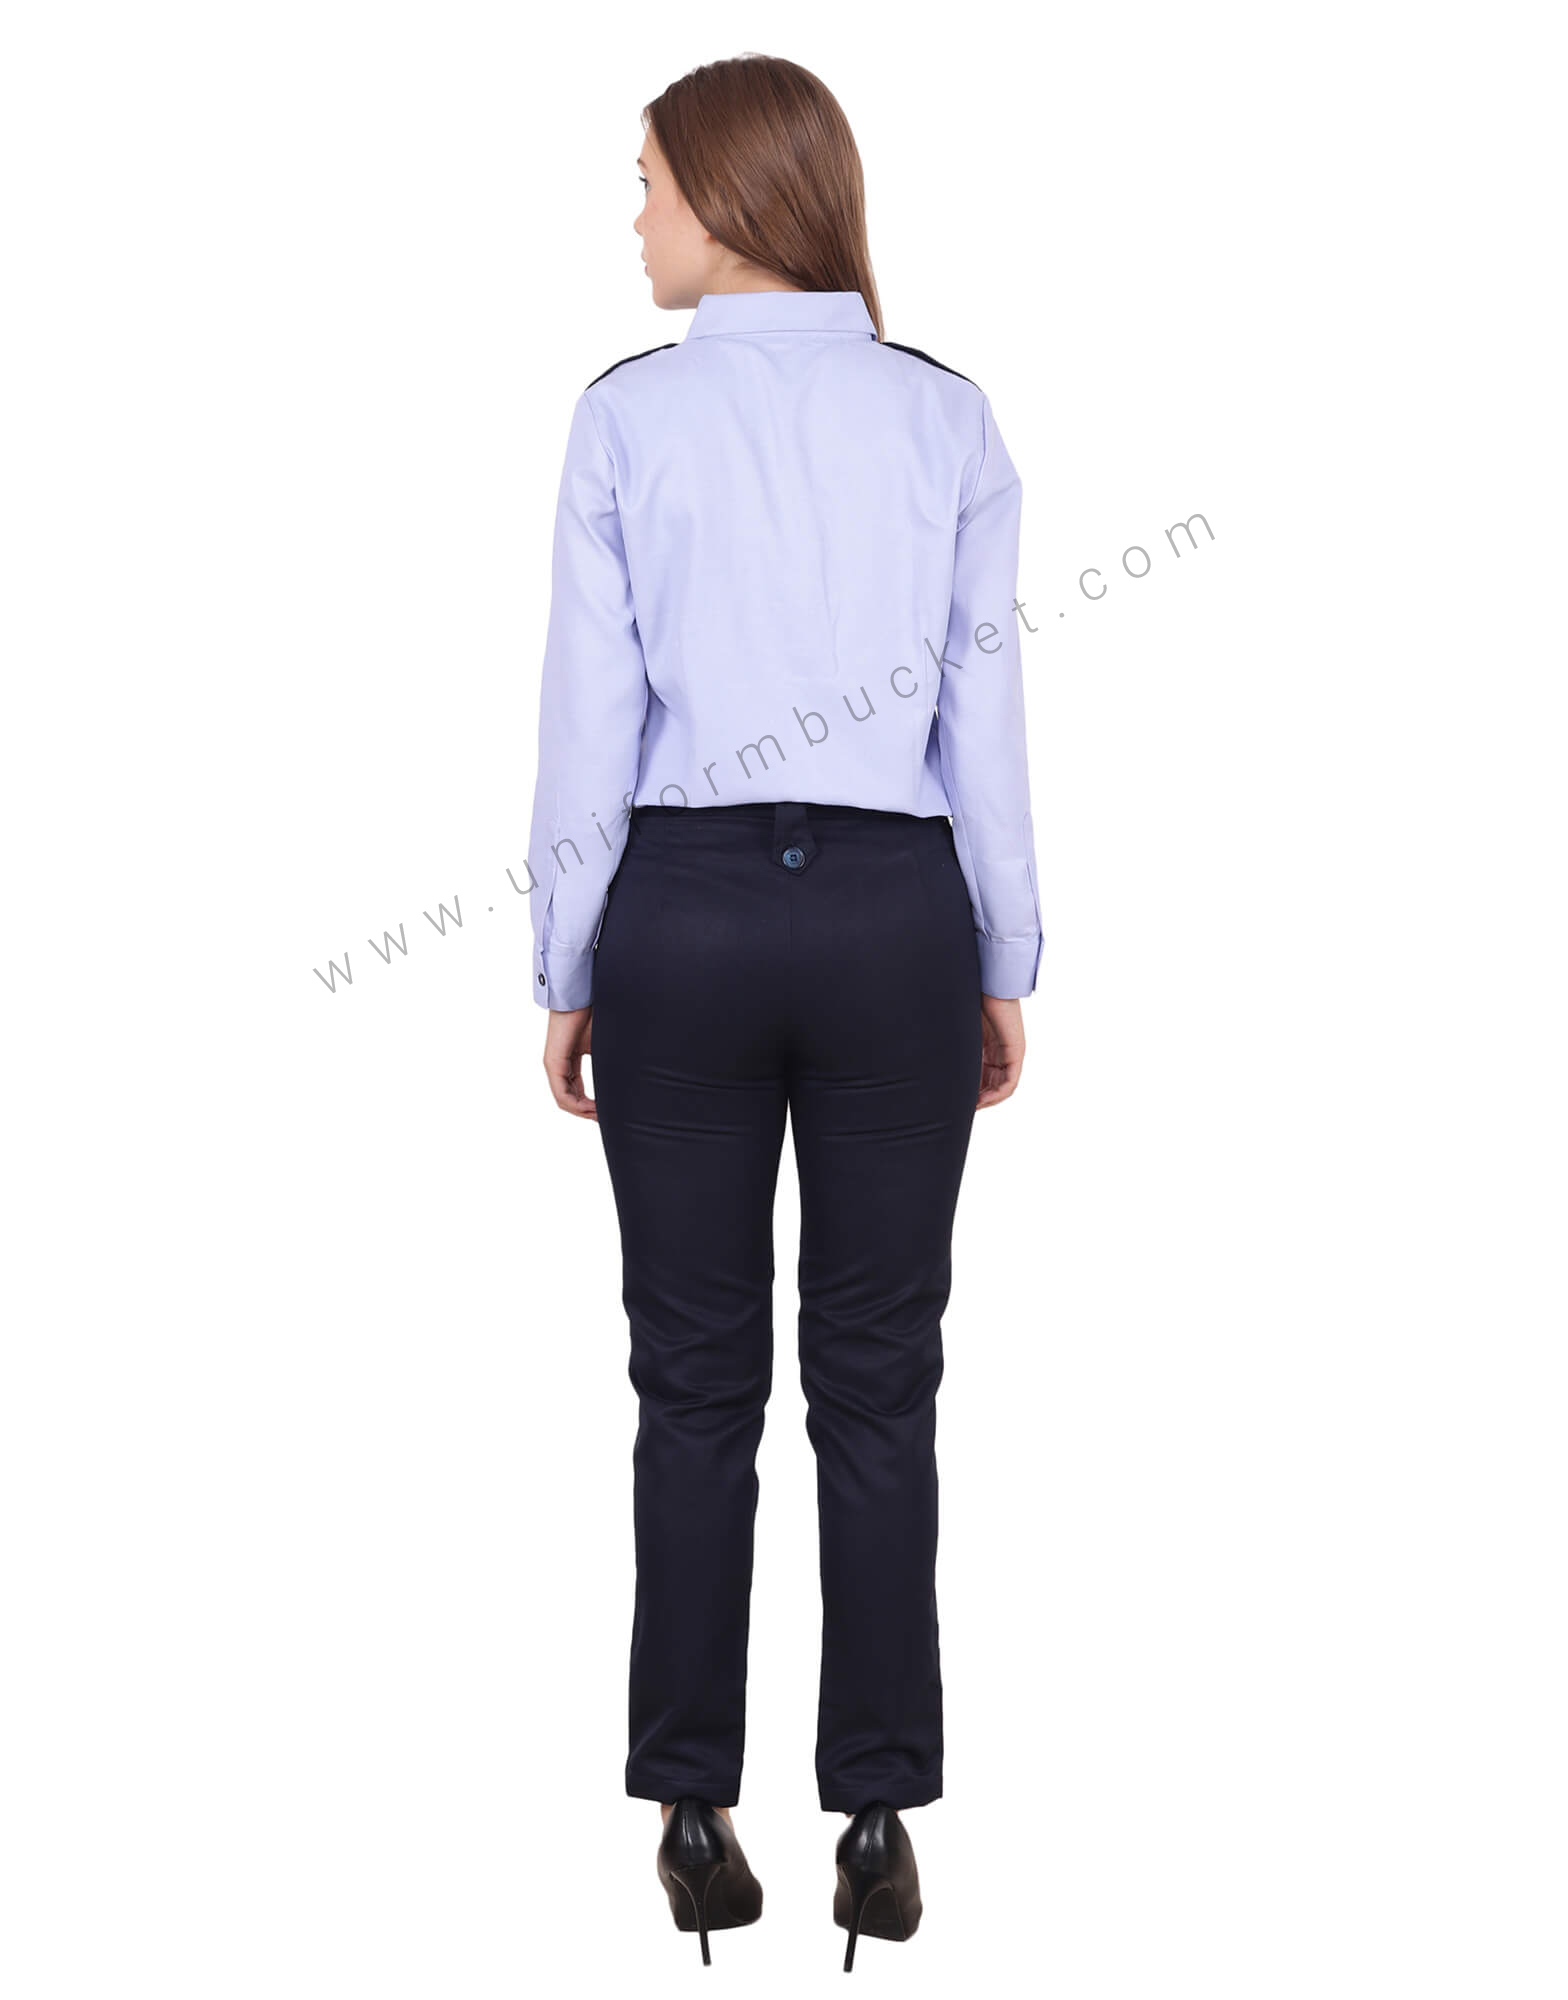 Uniform Pants for Girls  School Uniform Skirts  Aeropostale